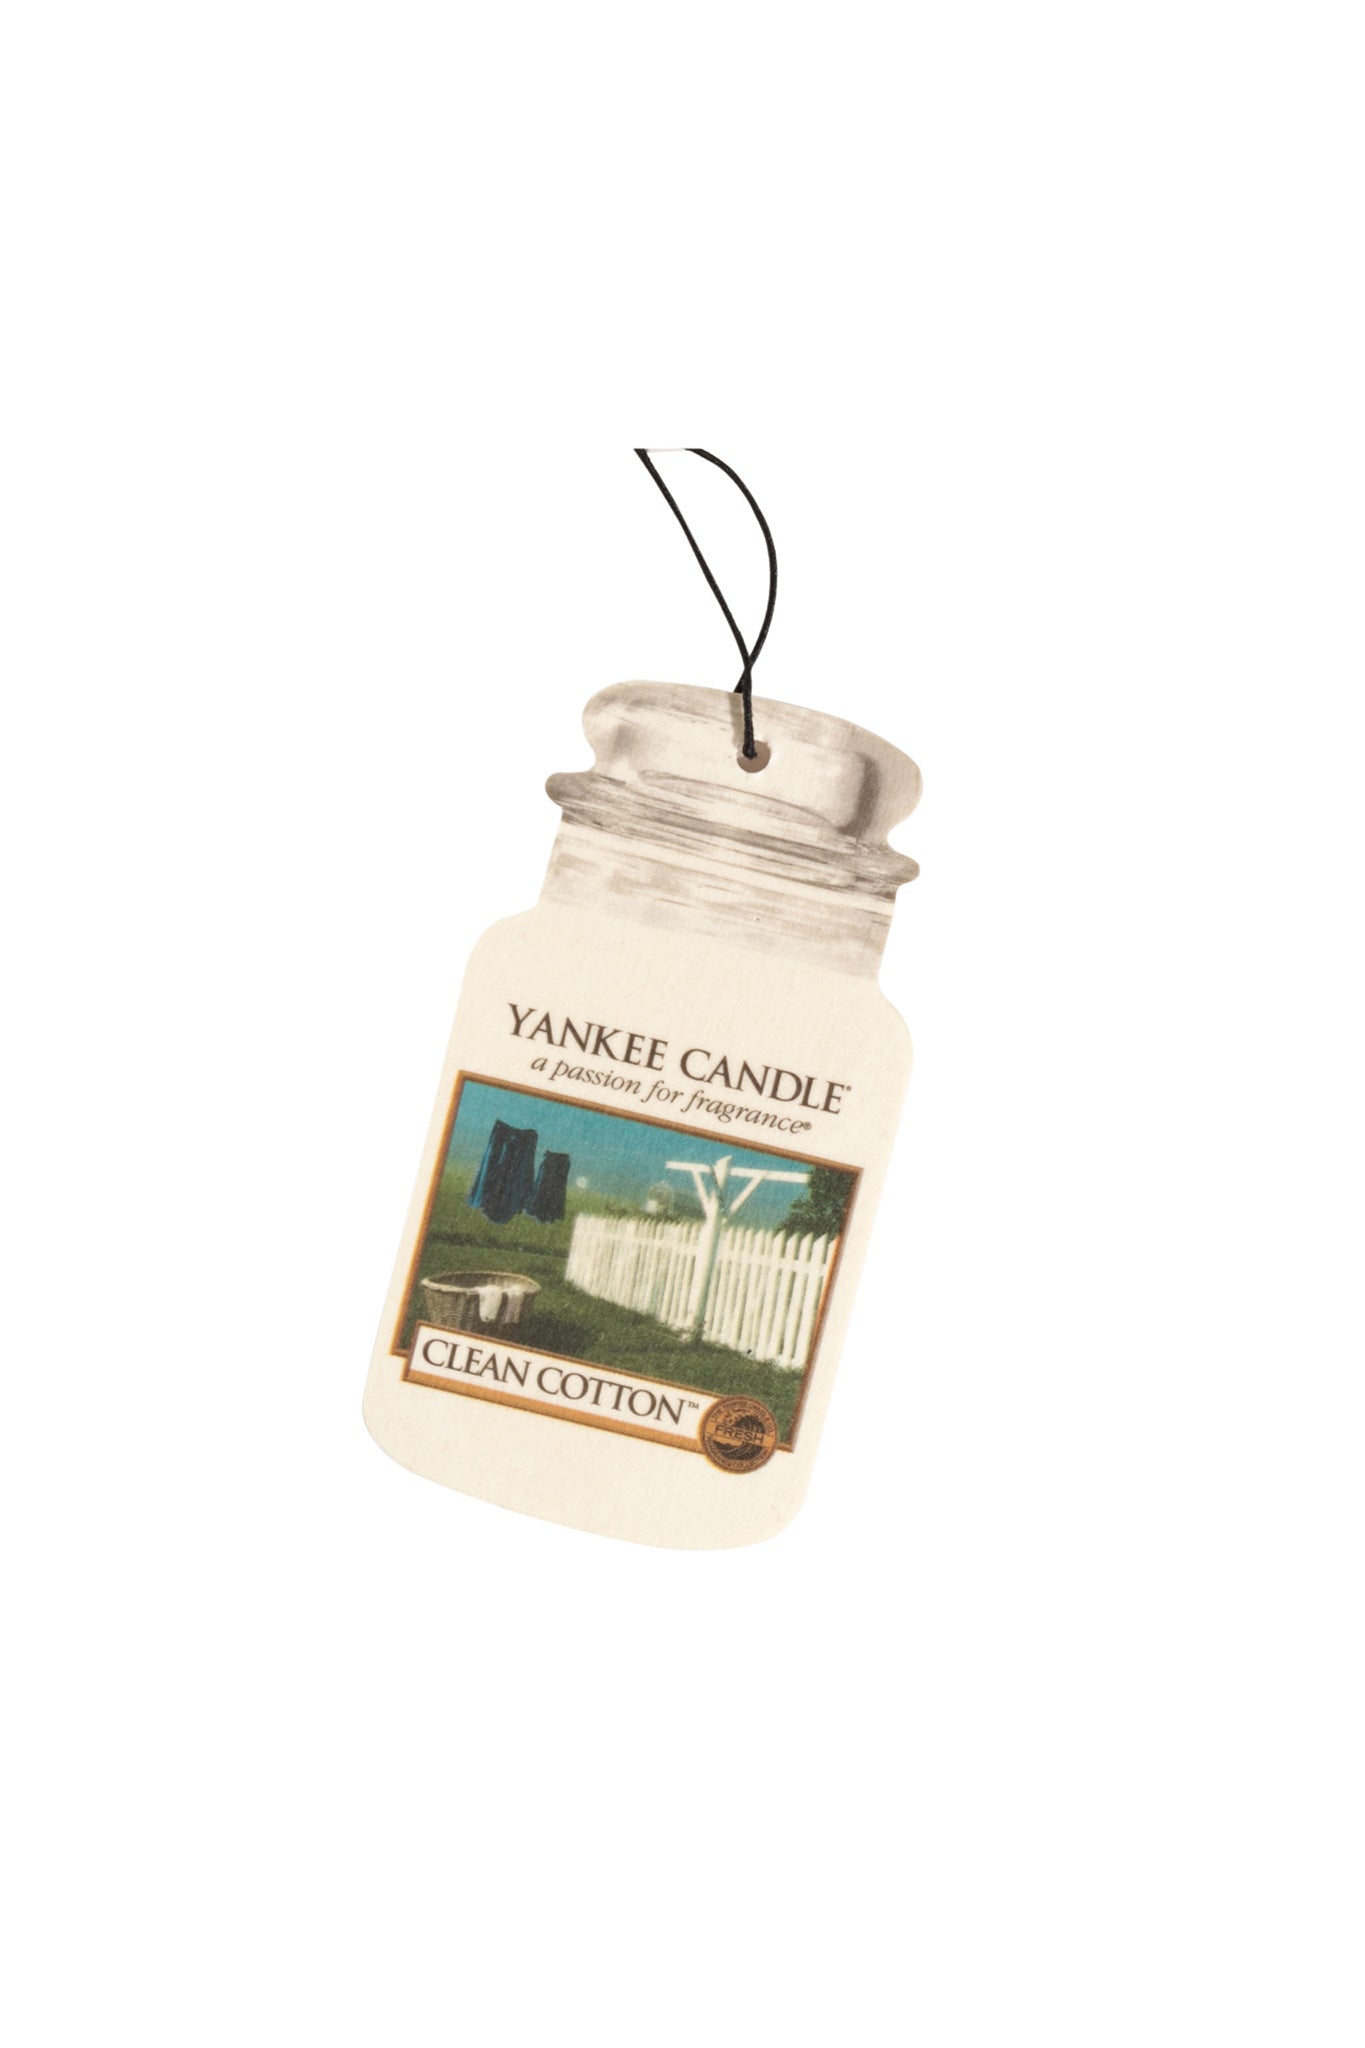 CLEAN COTTON -Yankee Candle- Car Jar